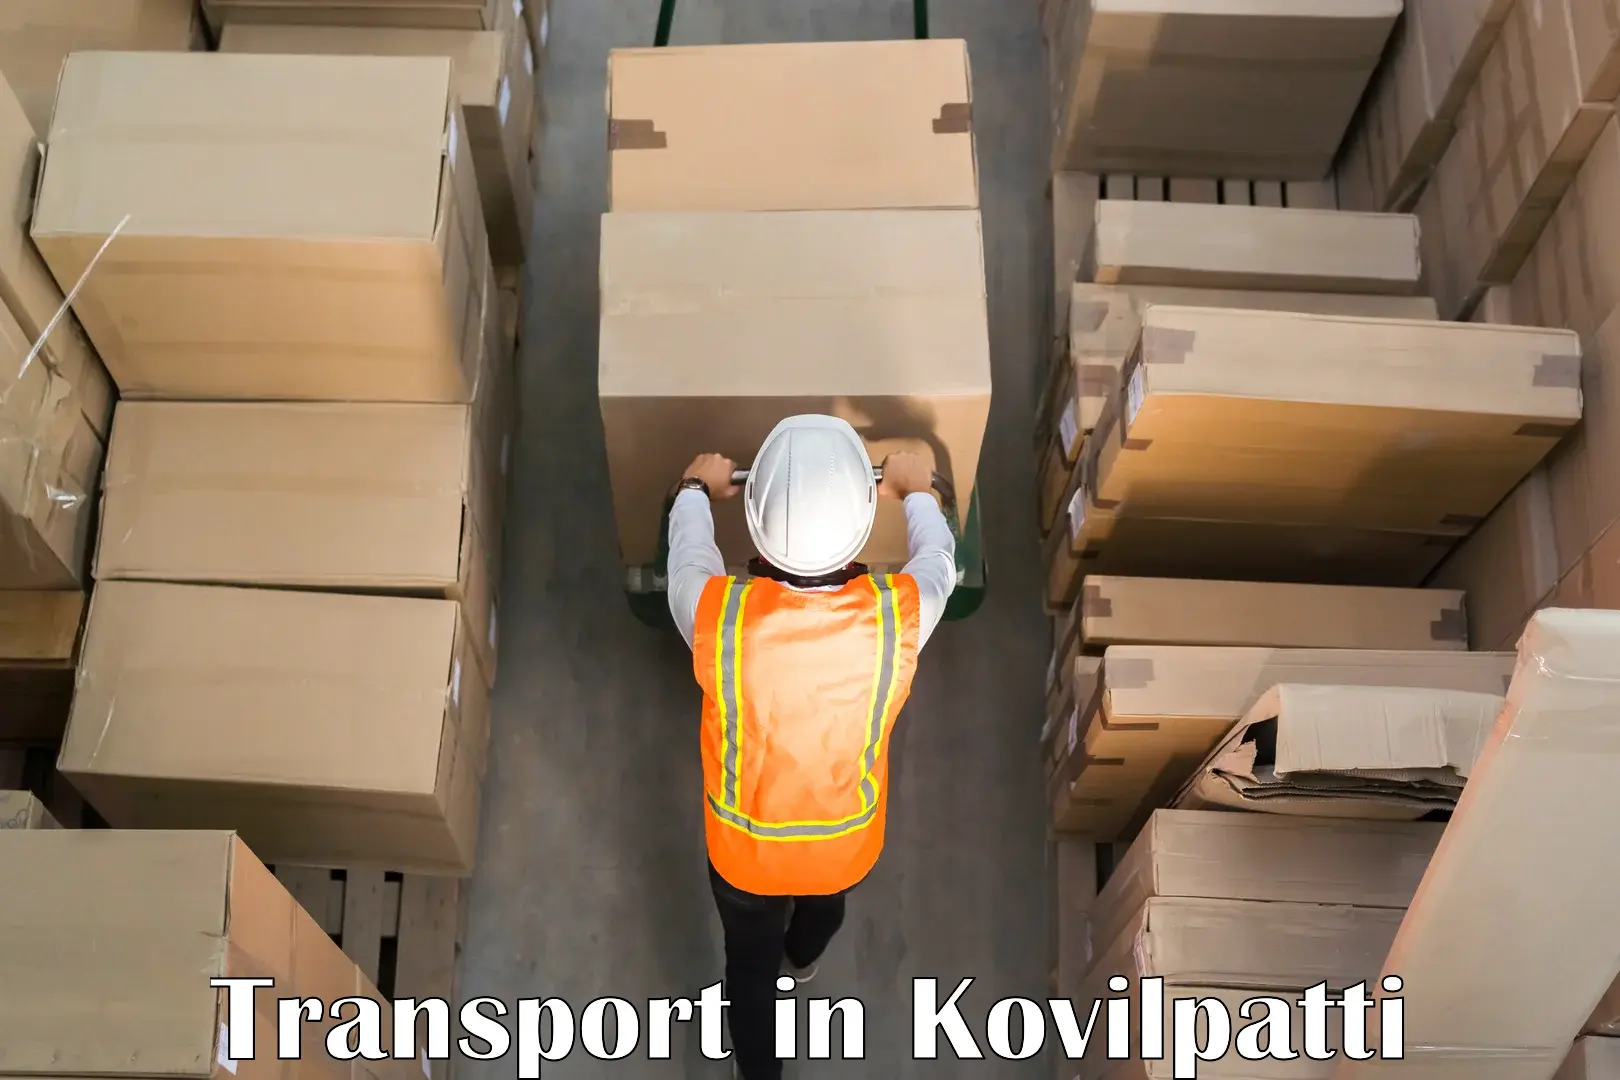 Domestic goods transportation services in Kovilpatti